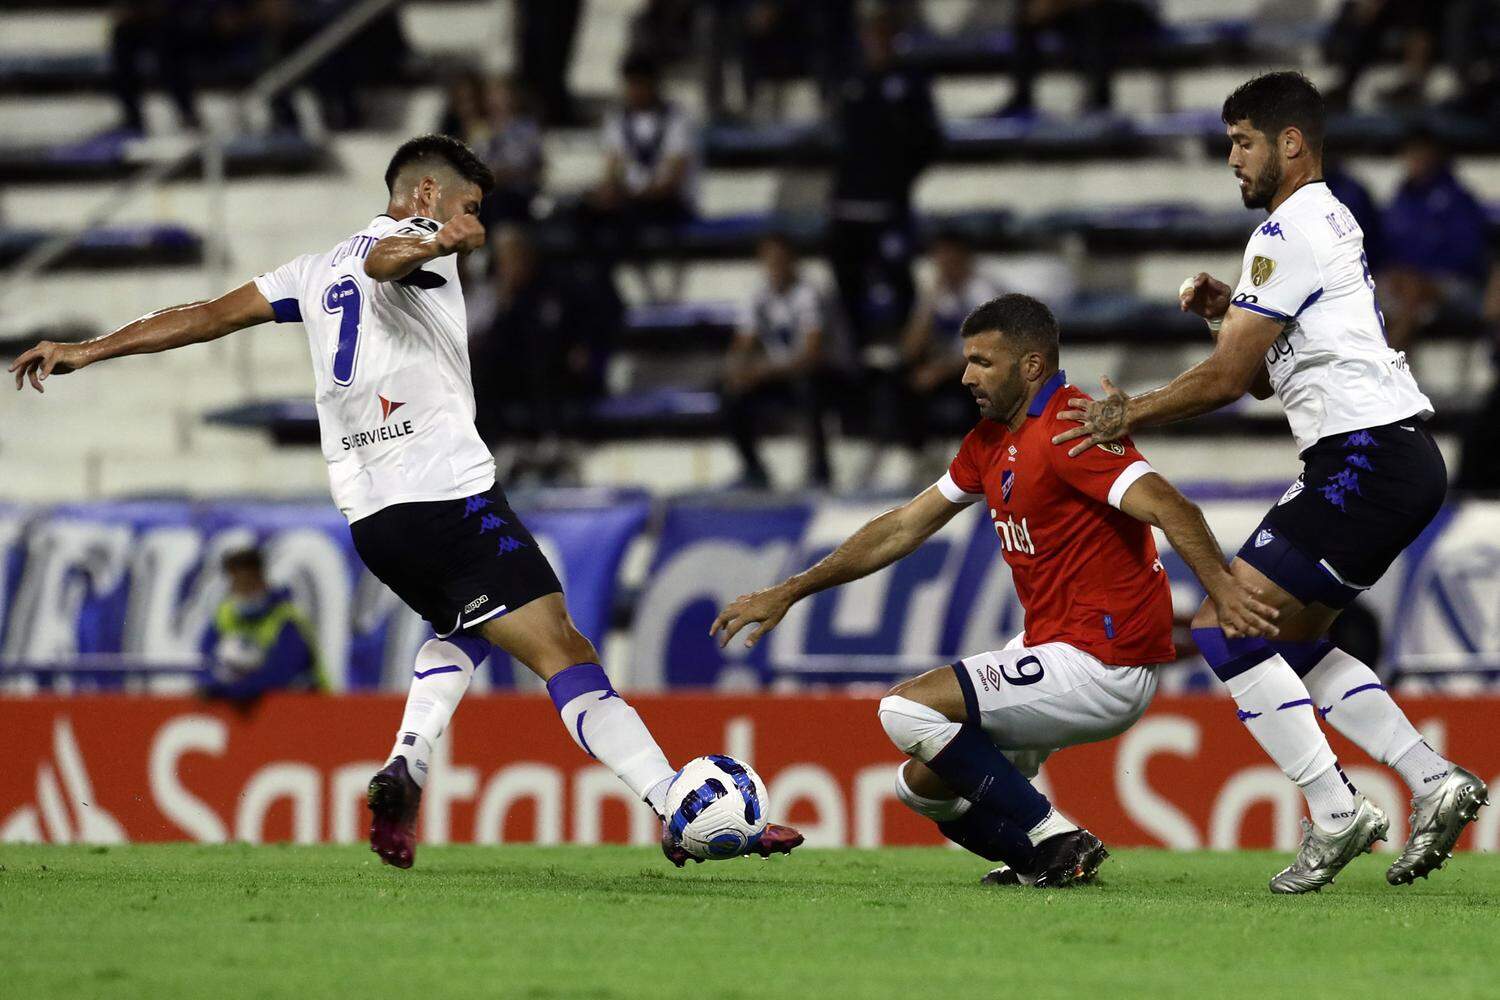 Tigre vs Vélez Sársfield: A Thrilling Encounter on the Football Field